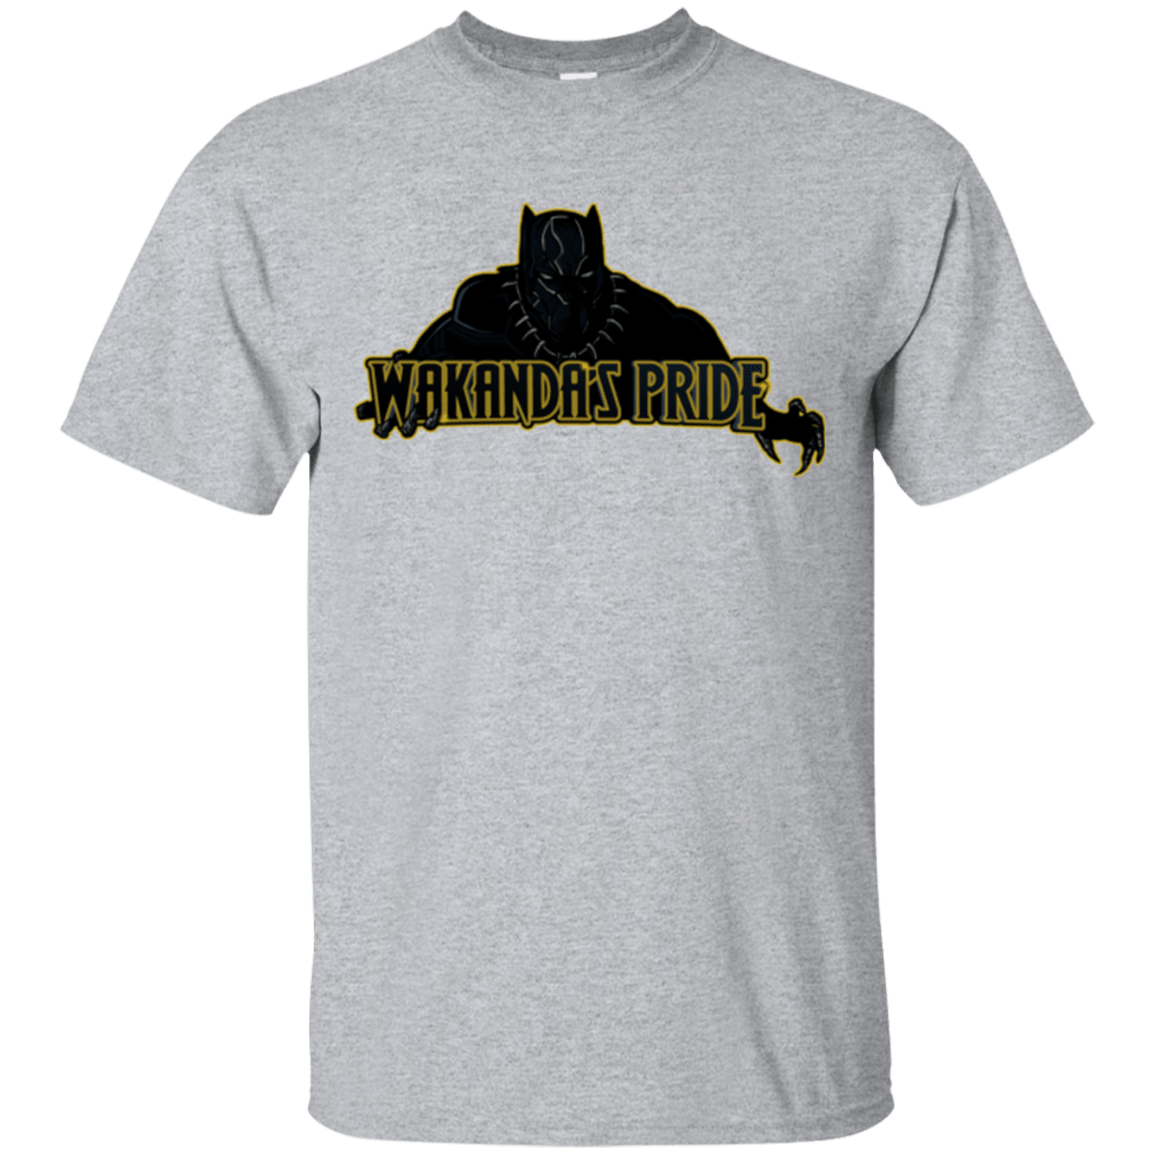 T-Shirts Sport Grey / S Wakandas Pride T-Shirt